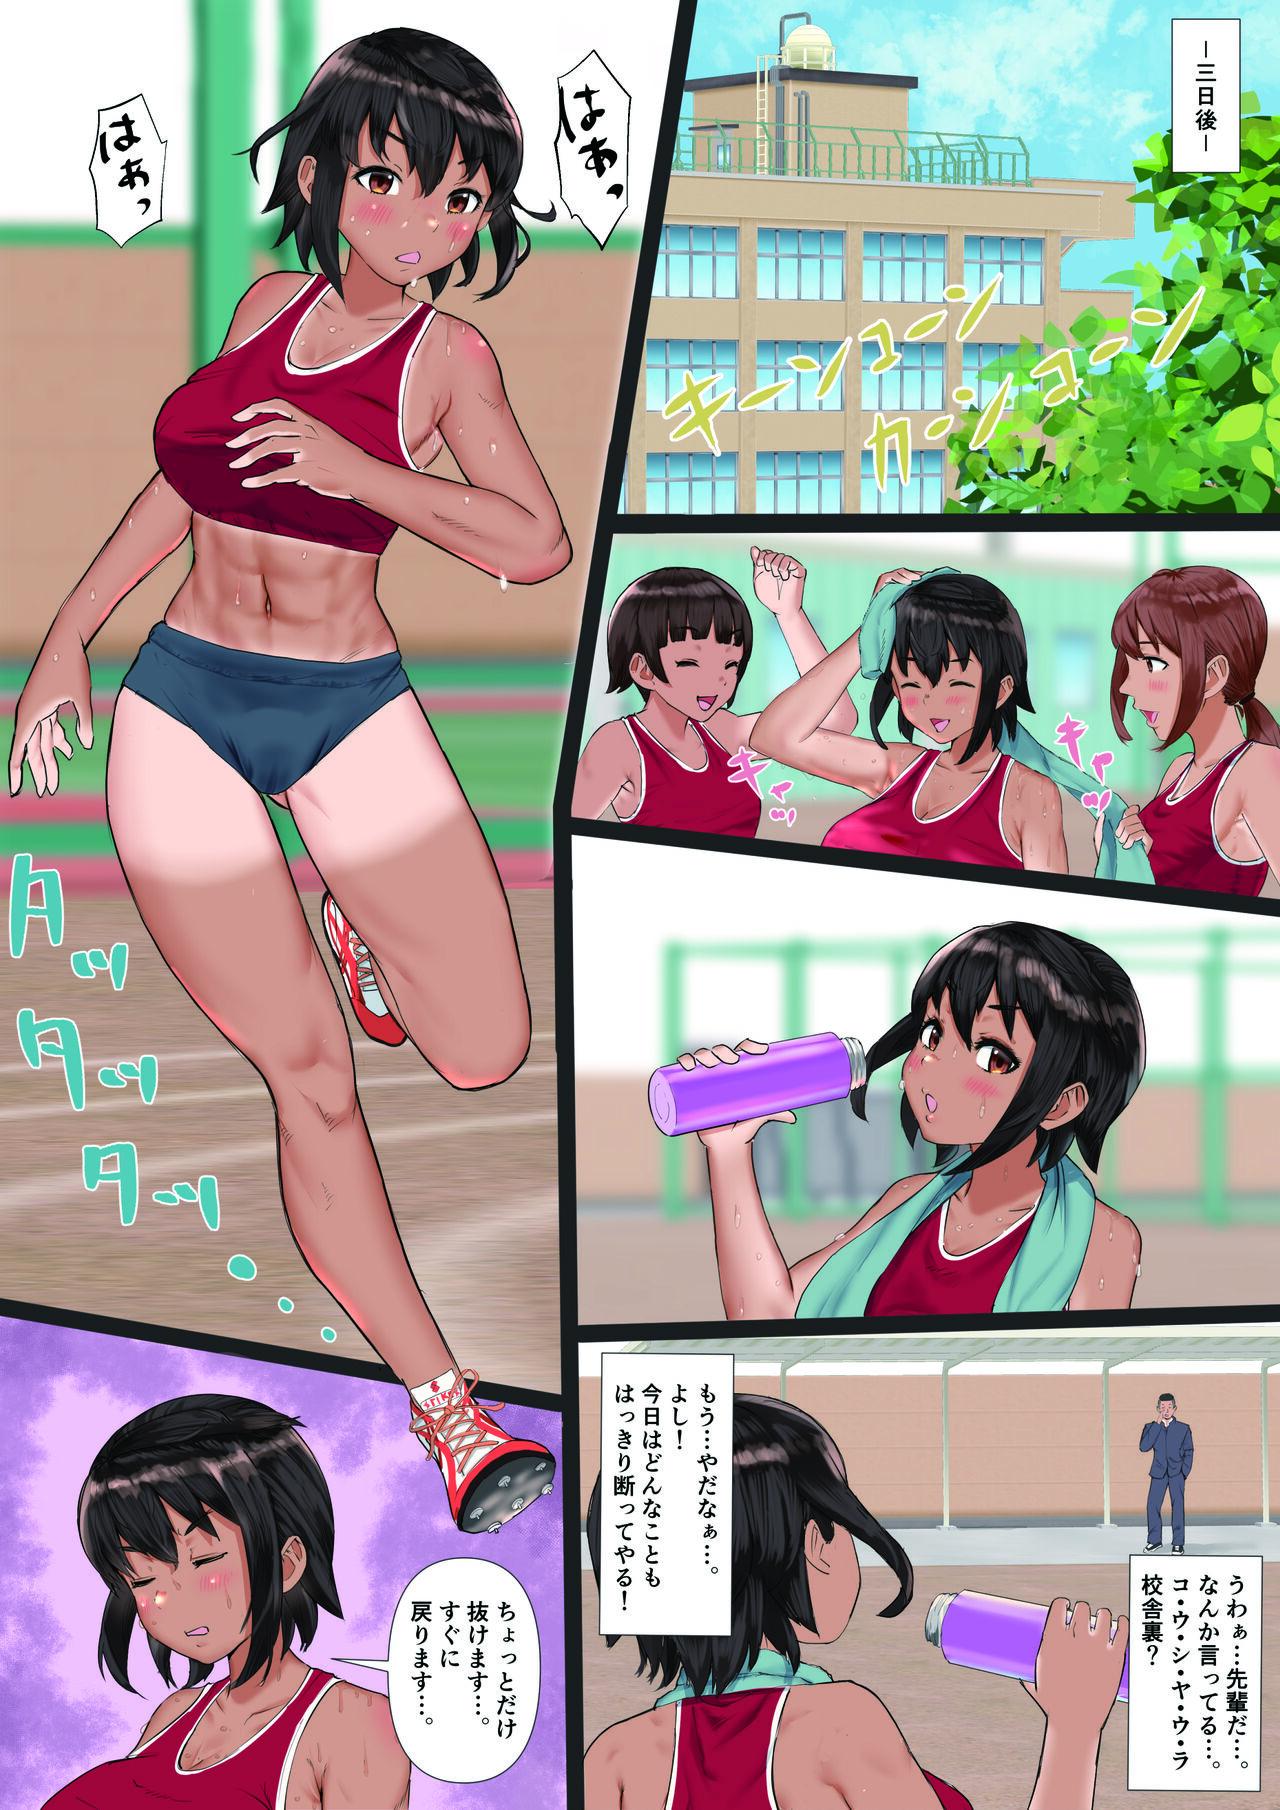 A Girlfriend From The Track And Field Club Turned Into A Senior's Woman-Rikujoubu no Kanojo ga, Senpai no Onna ni Natteita Nante. 23